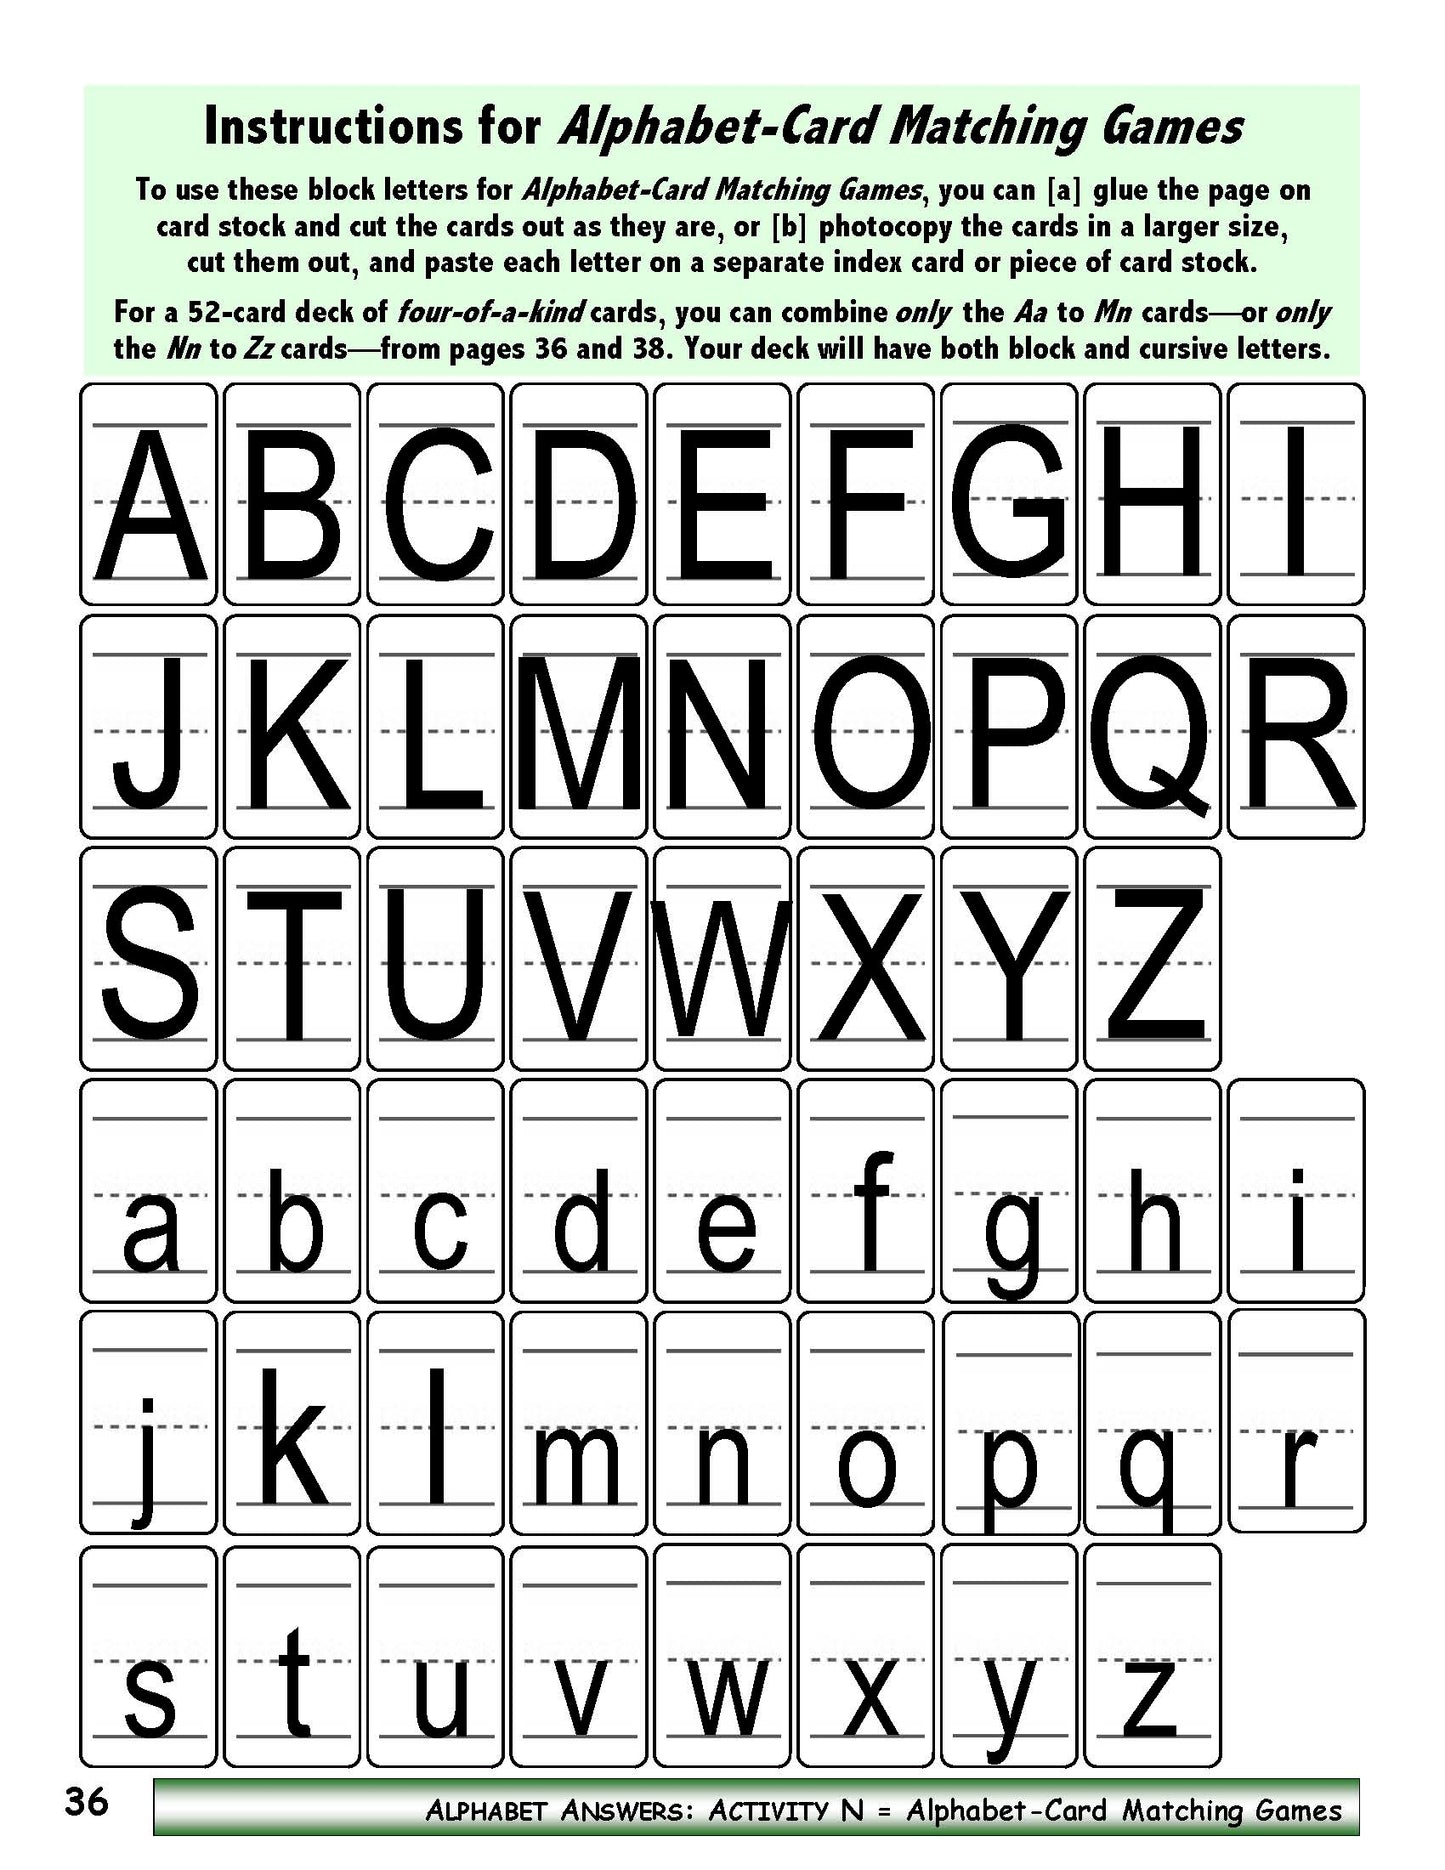 A-07.01: Make & Use Alphabet- Letter Card Packs